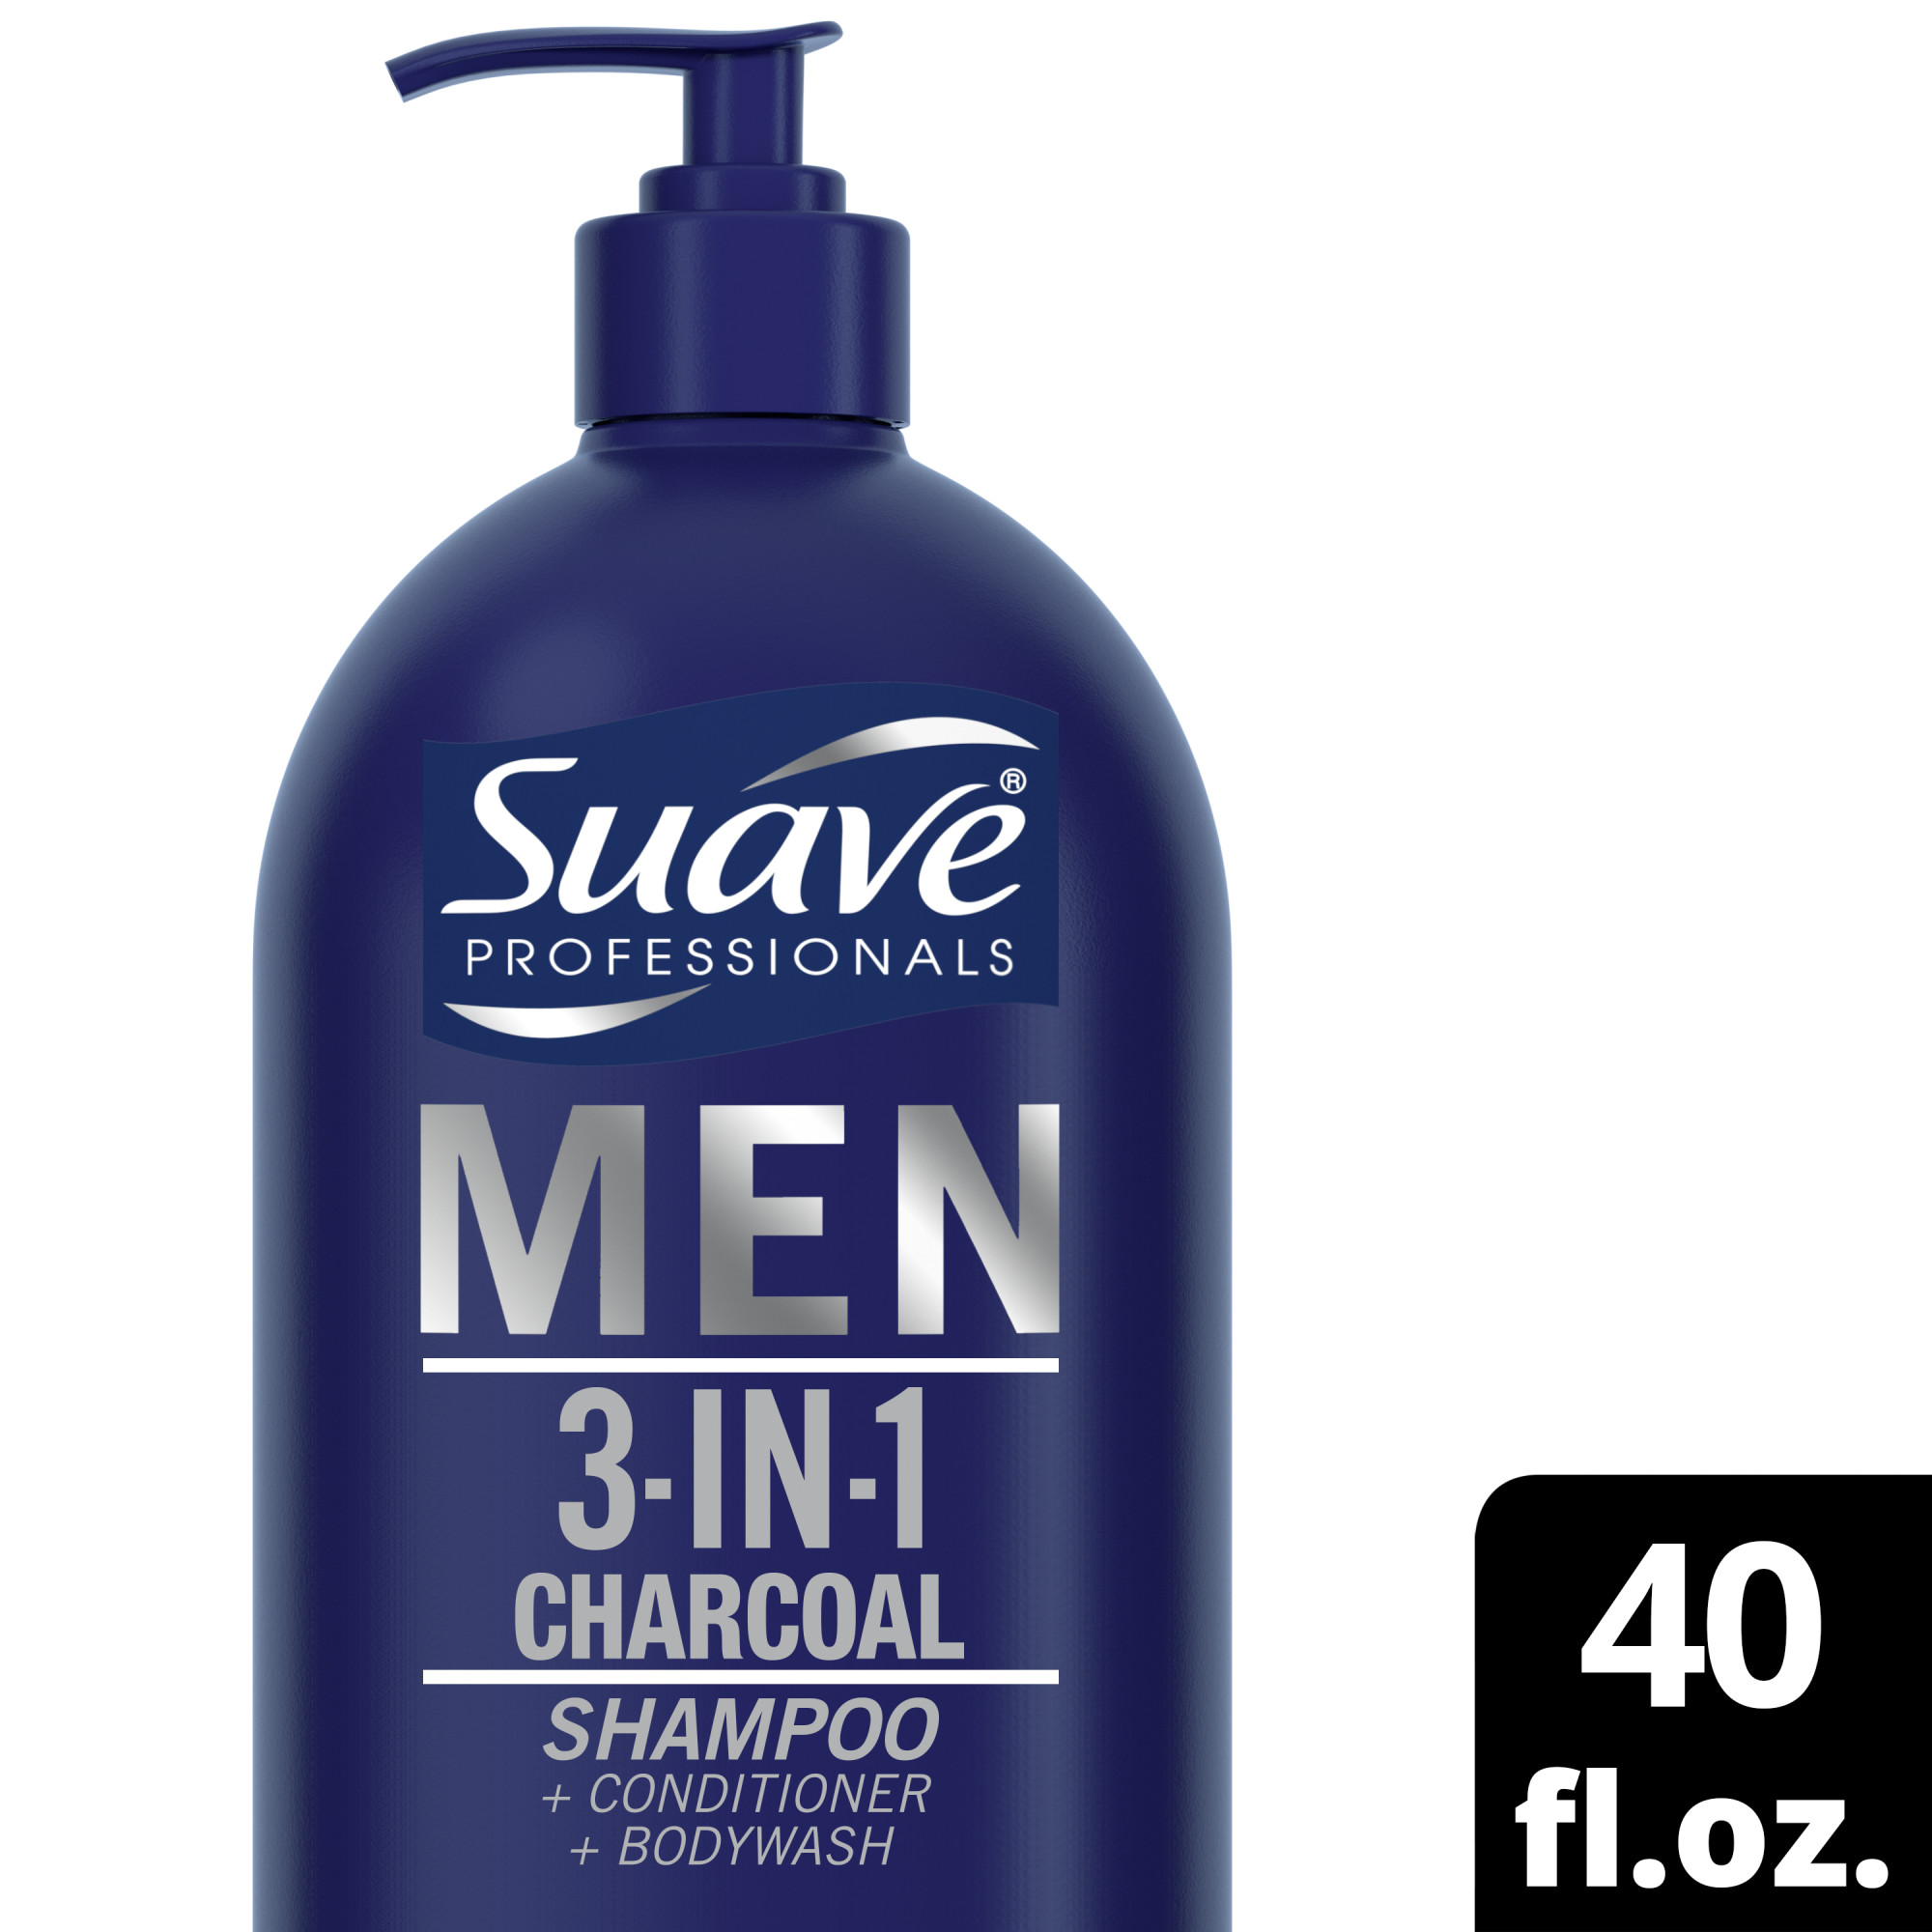 Suave Professionals Men 3-in-1 Shampoo, Conditioner & Body Wash, Charcoal, 40 fl oz - image 1 of 8